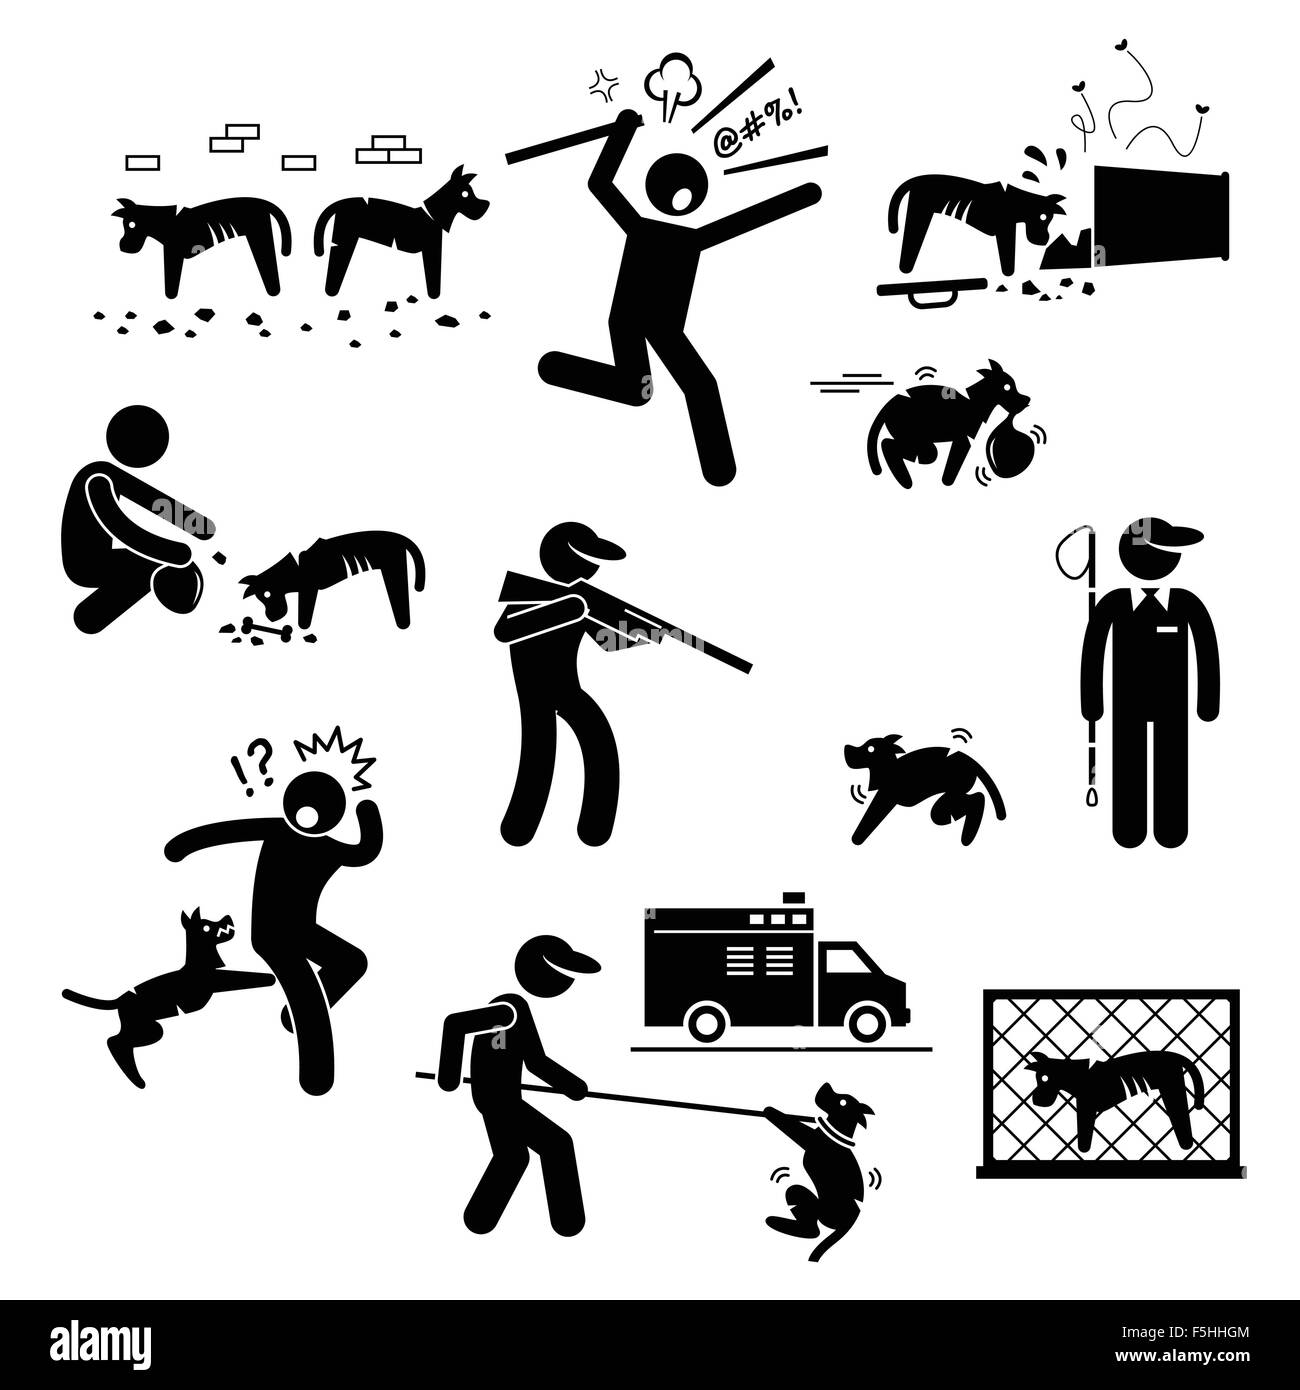 Streunender Hund Problem Thema Strichmännchen Piktogramm Icons Stock Vektor